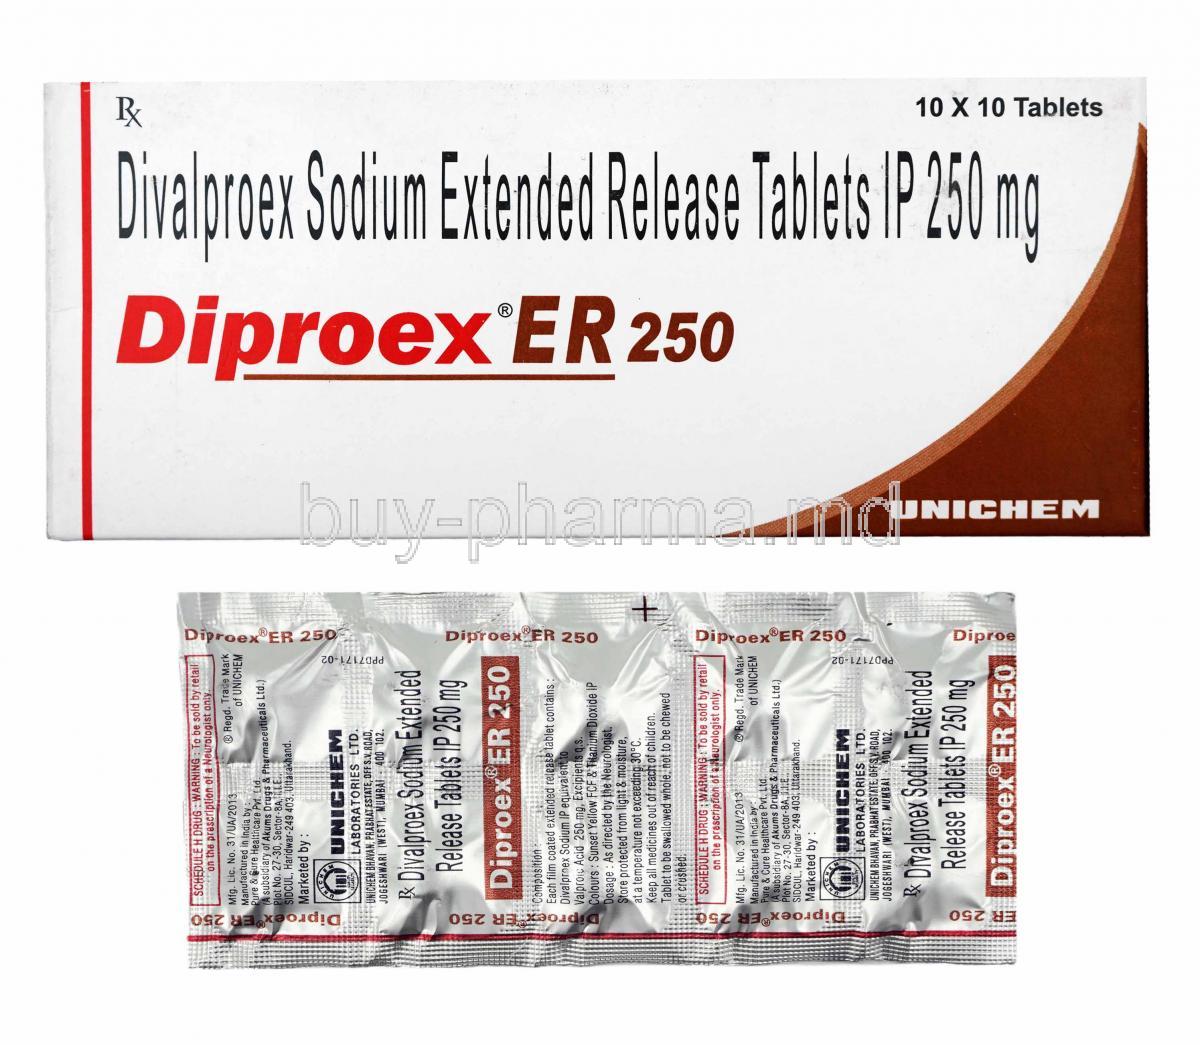 Diproex, Divalproex 250mg box and tablets